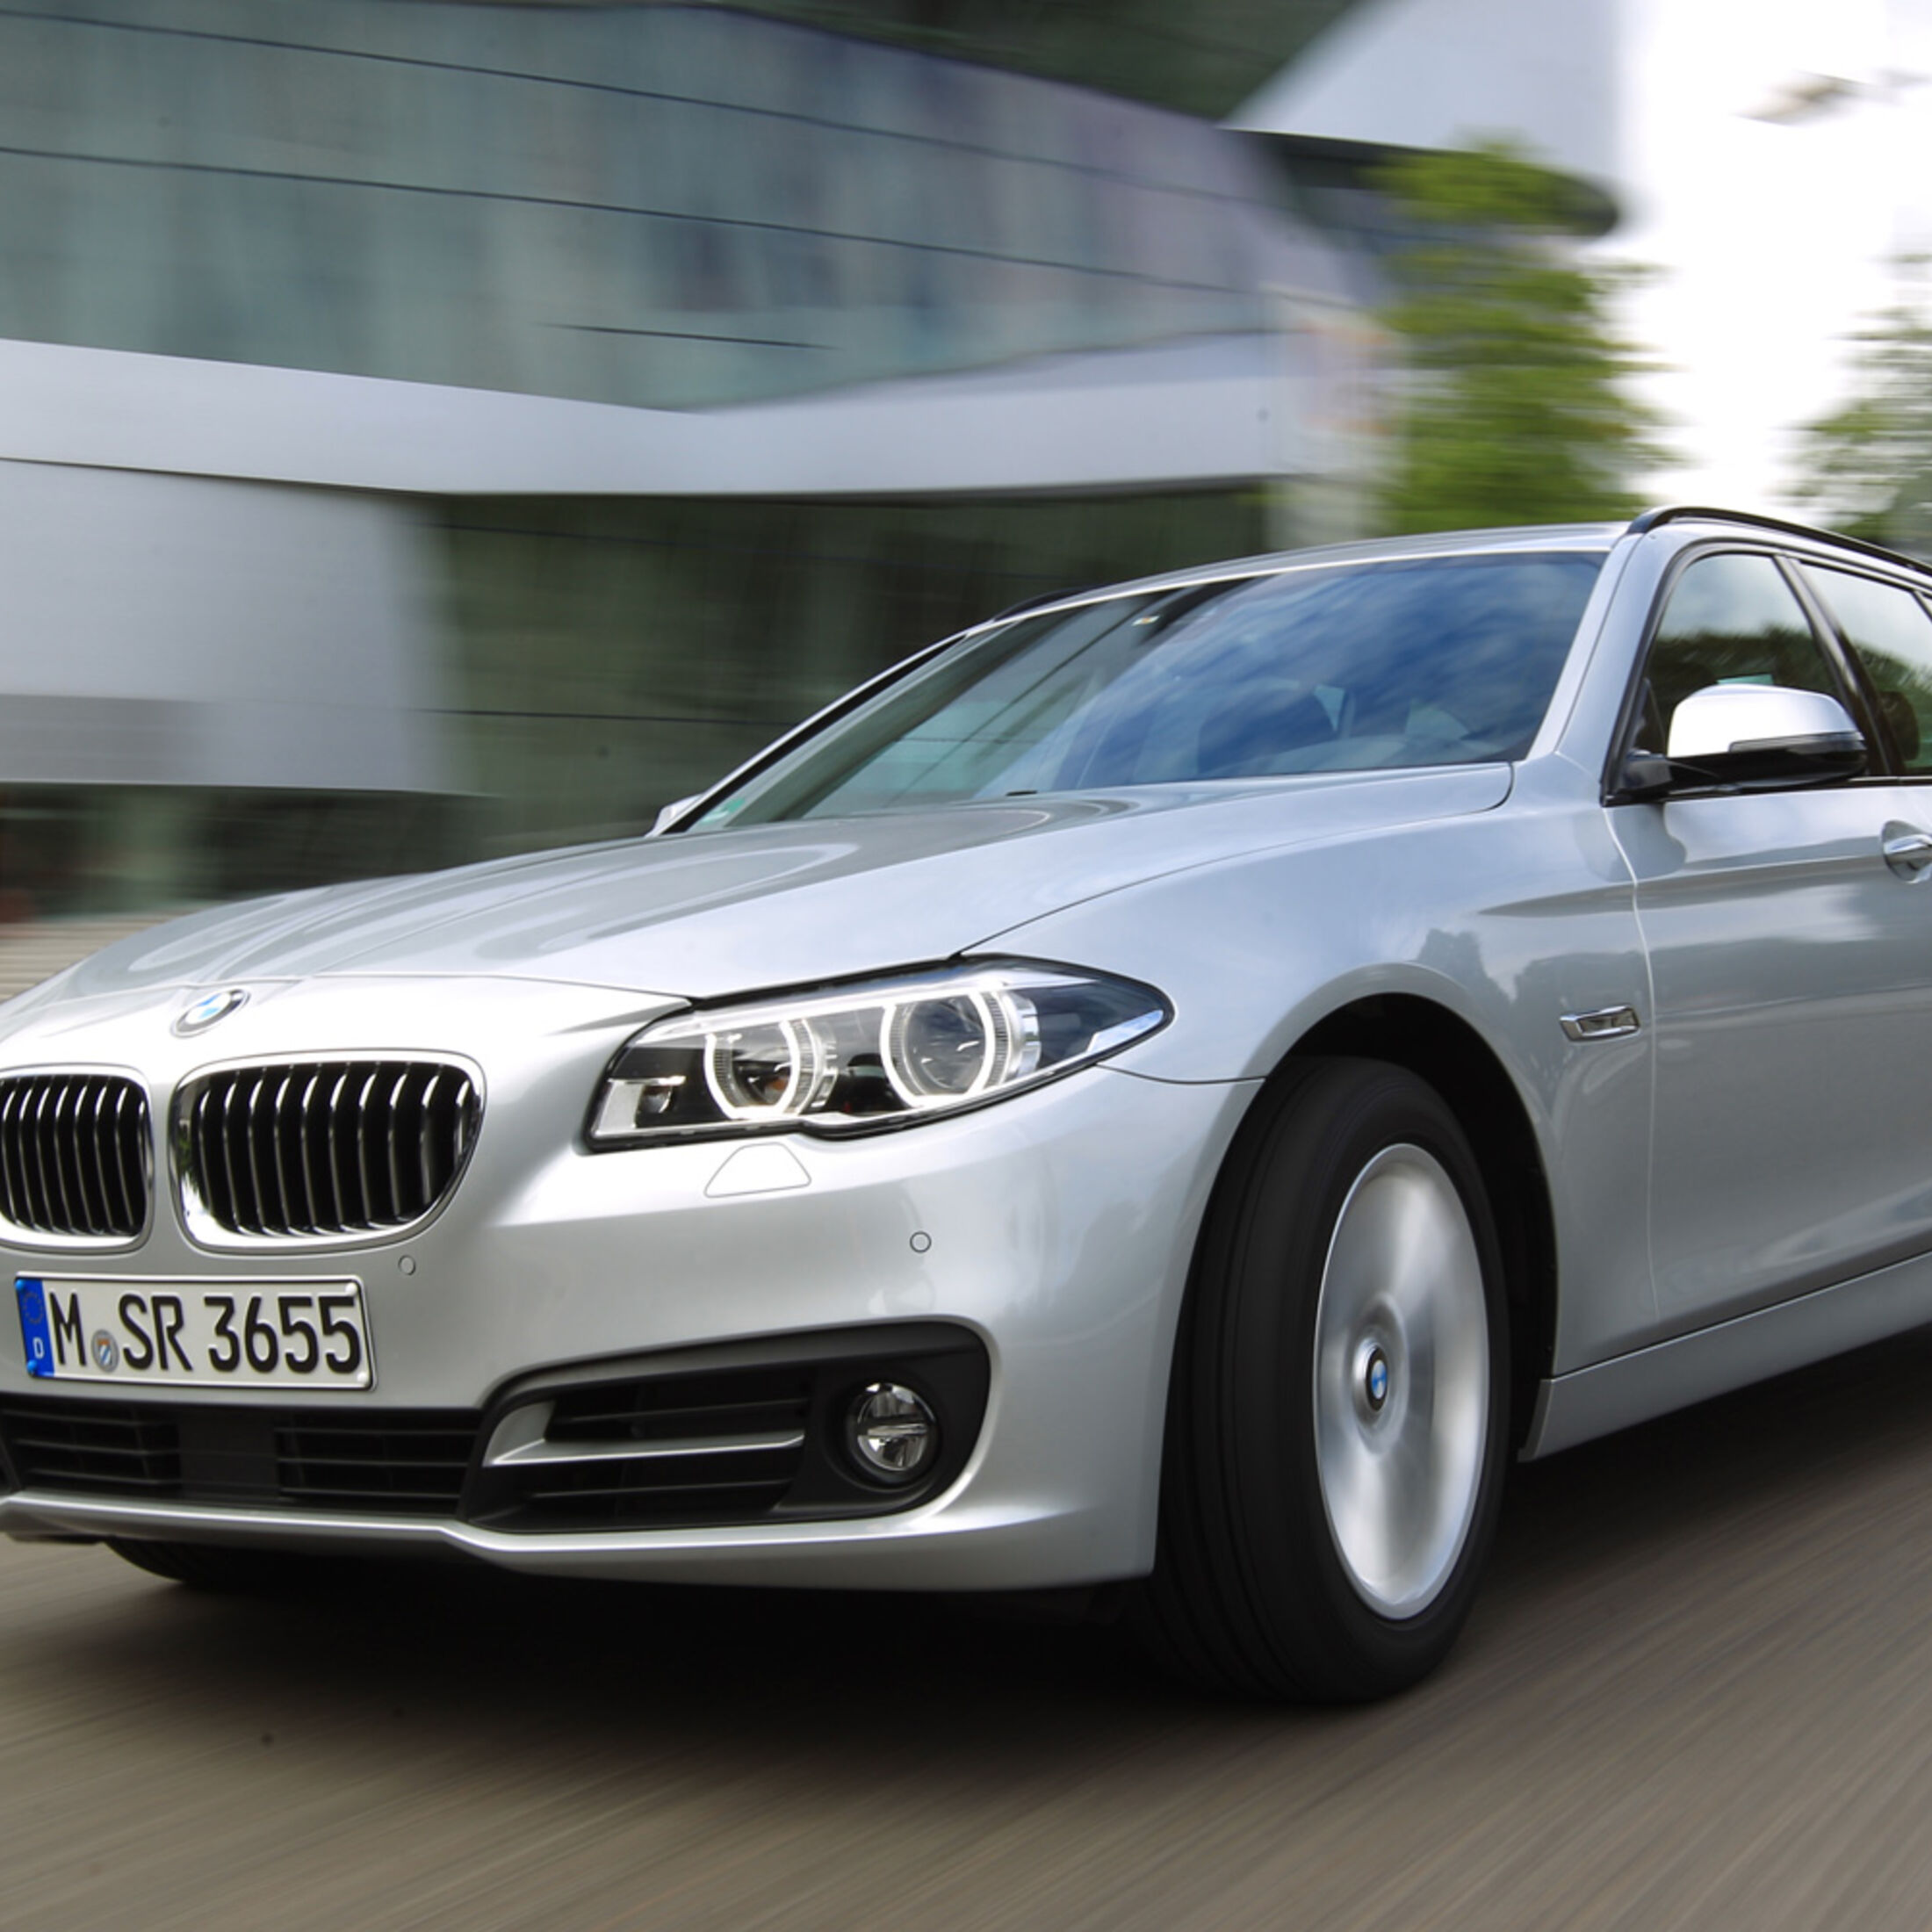 https://imgr1.auto-motor-und-sport.de/BMW-525d-Touring-Frontansicht-jsonLd1x1-8d7c78e0-725658.jpg